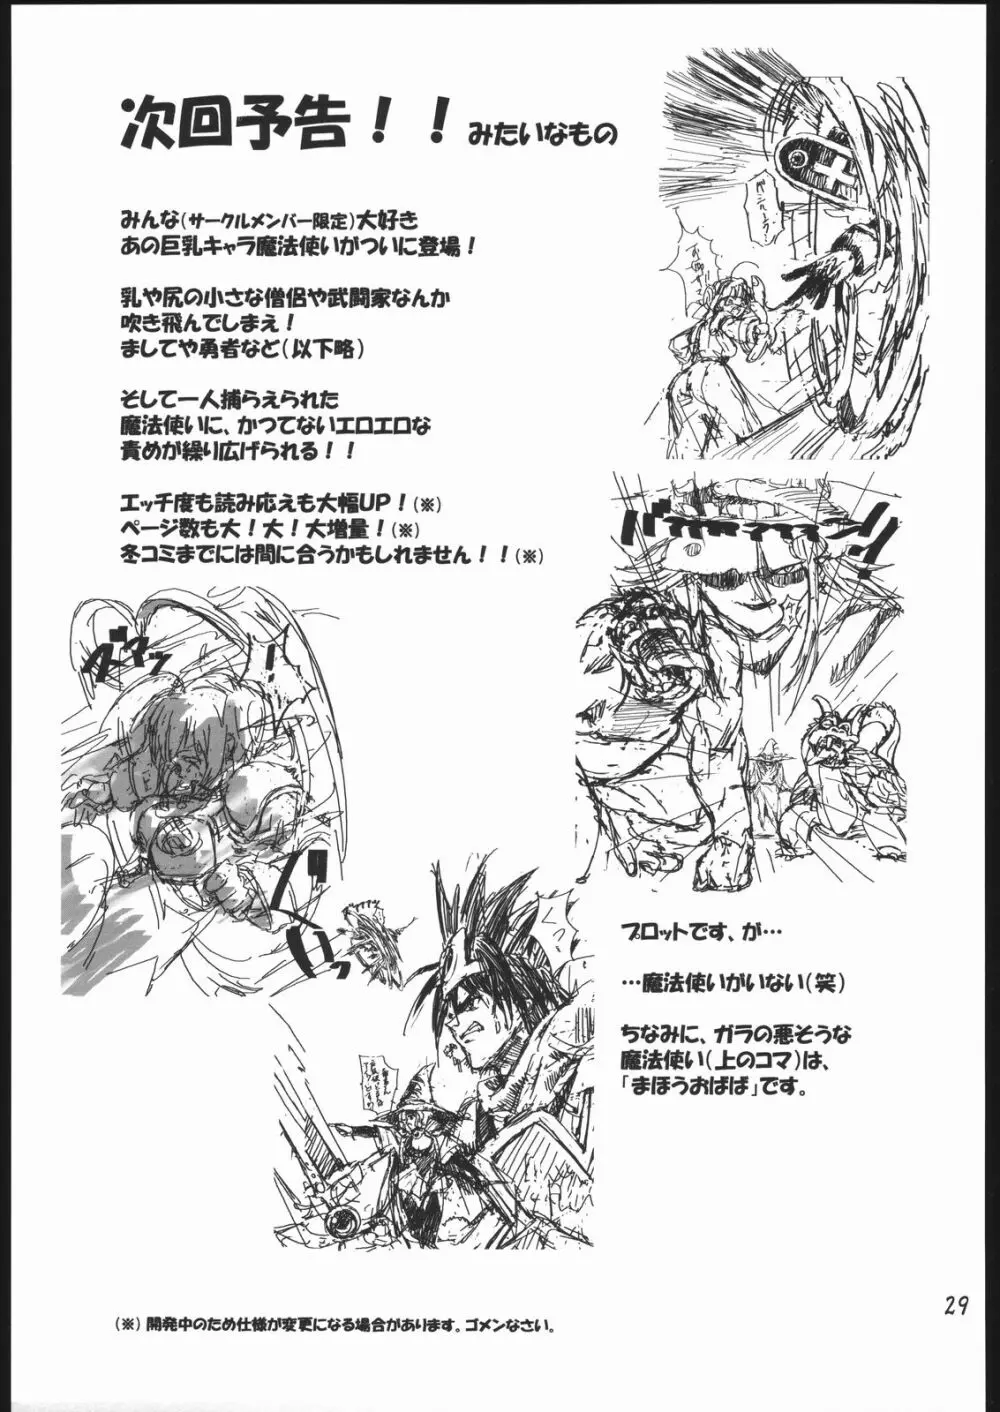 武闘家vs. - page28